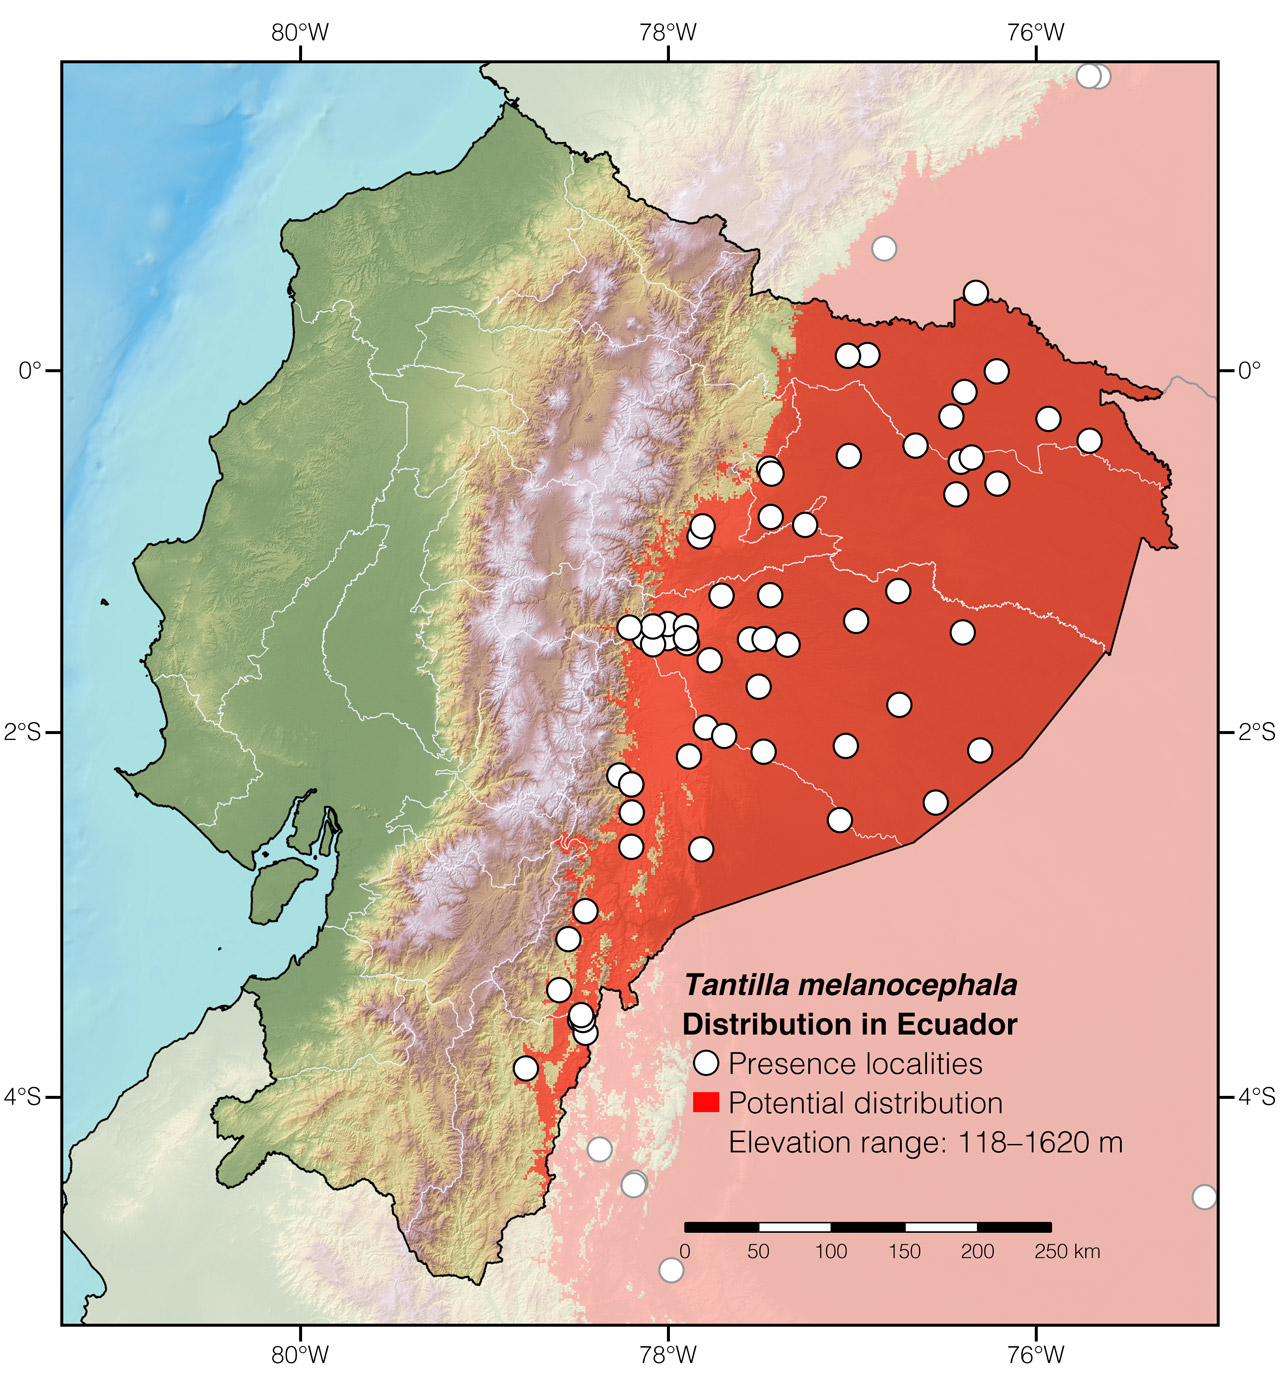 Distribution of Tantilla melanocephala in Ecuador